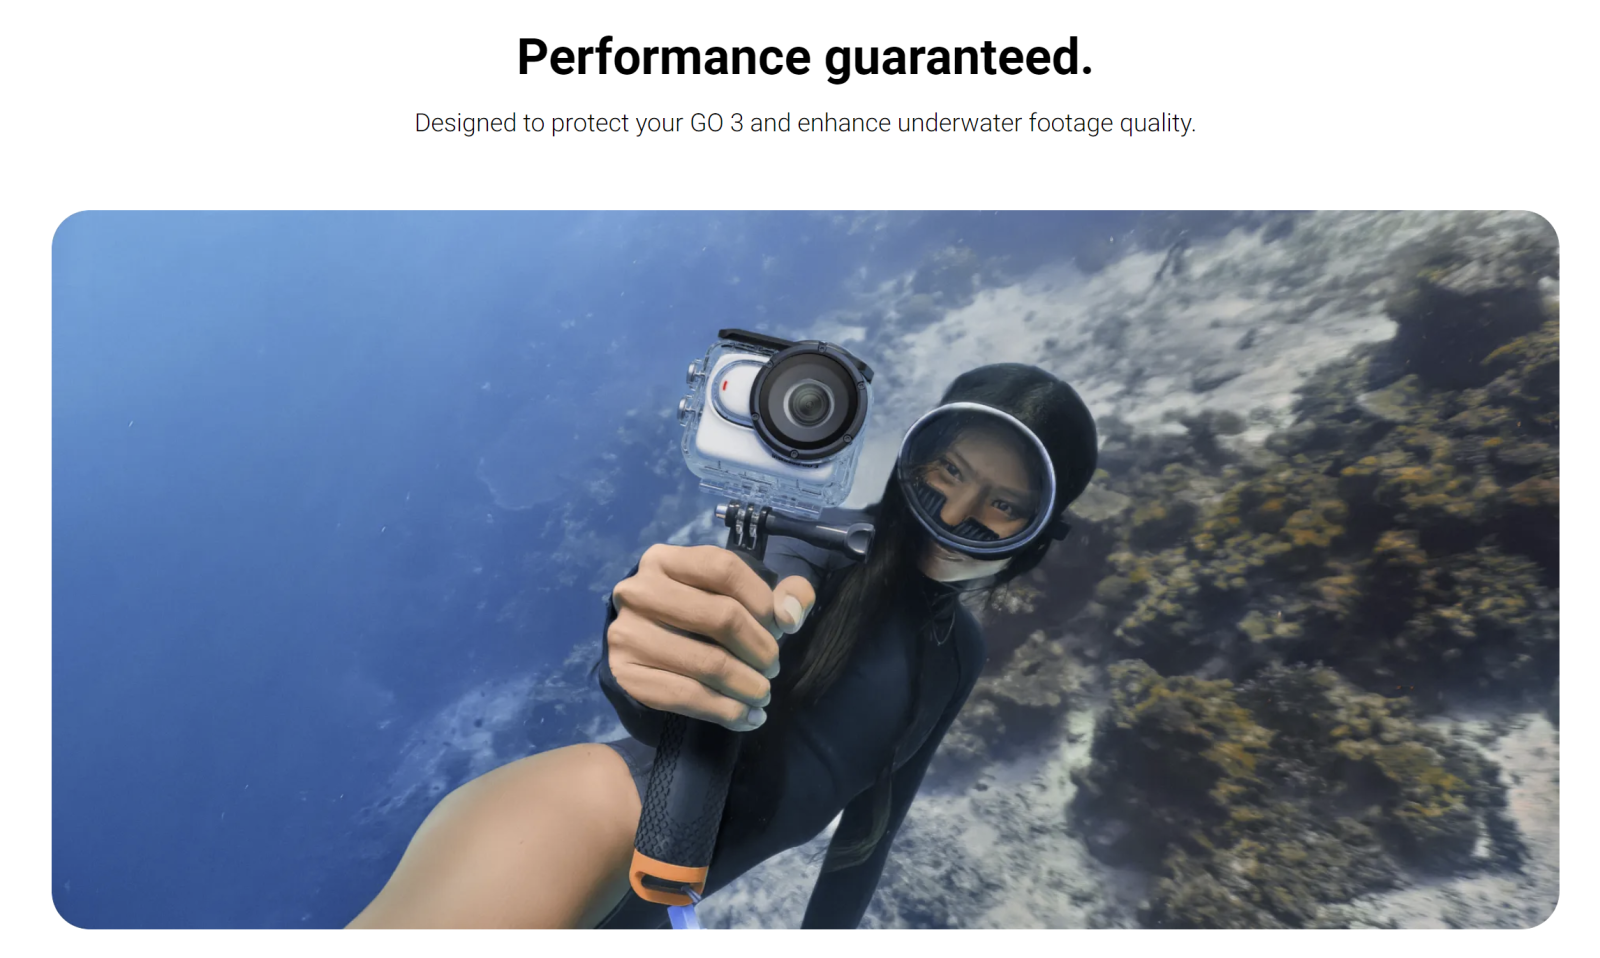 Insta360 GO3 Dive Case - Performance guaranteed